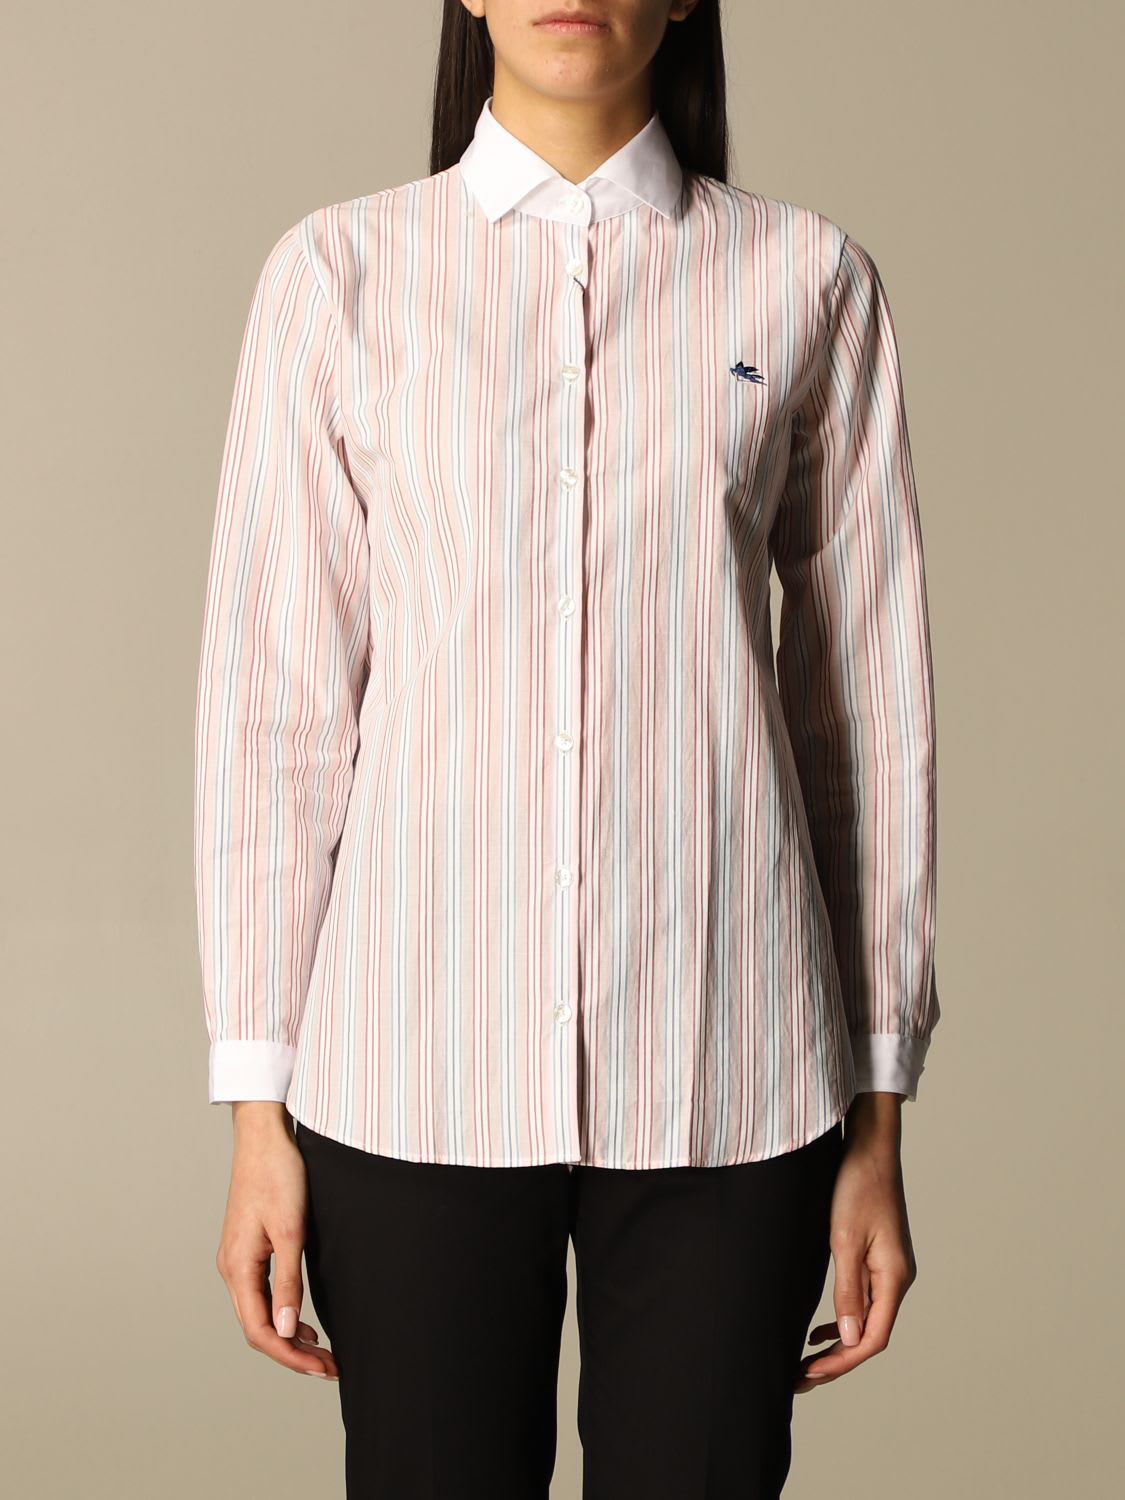 Etro Shirt Etro Shirt In Micro-striped Cotton